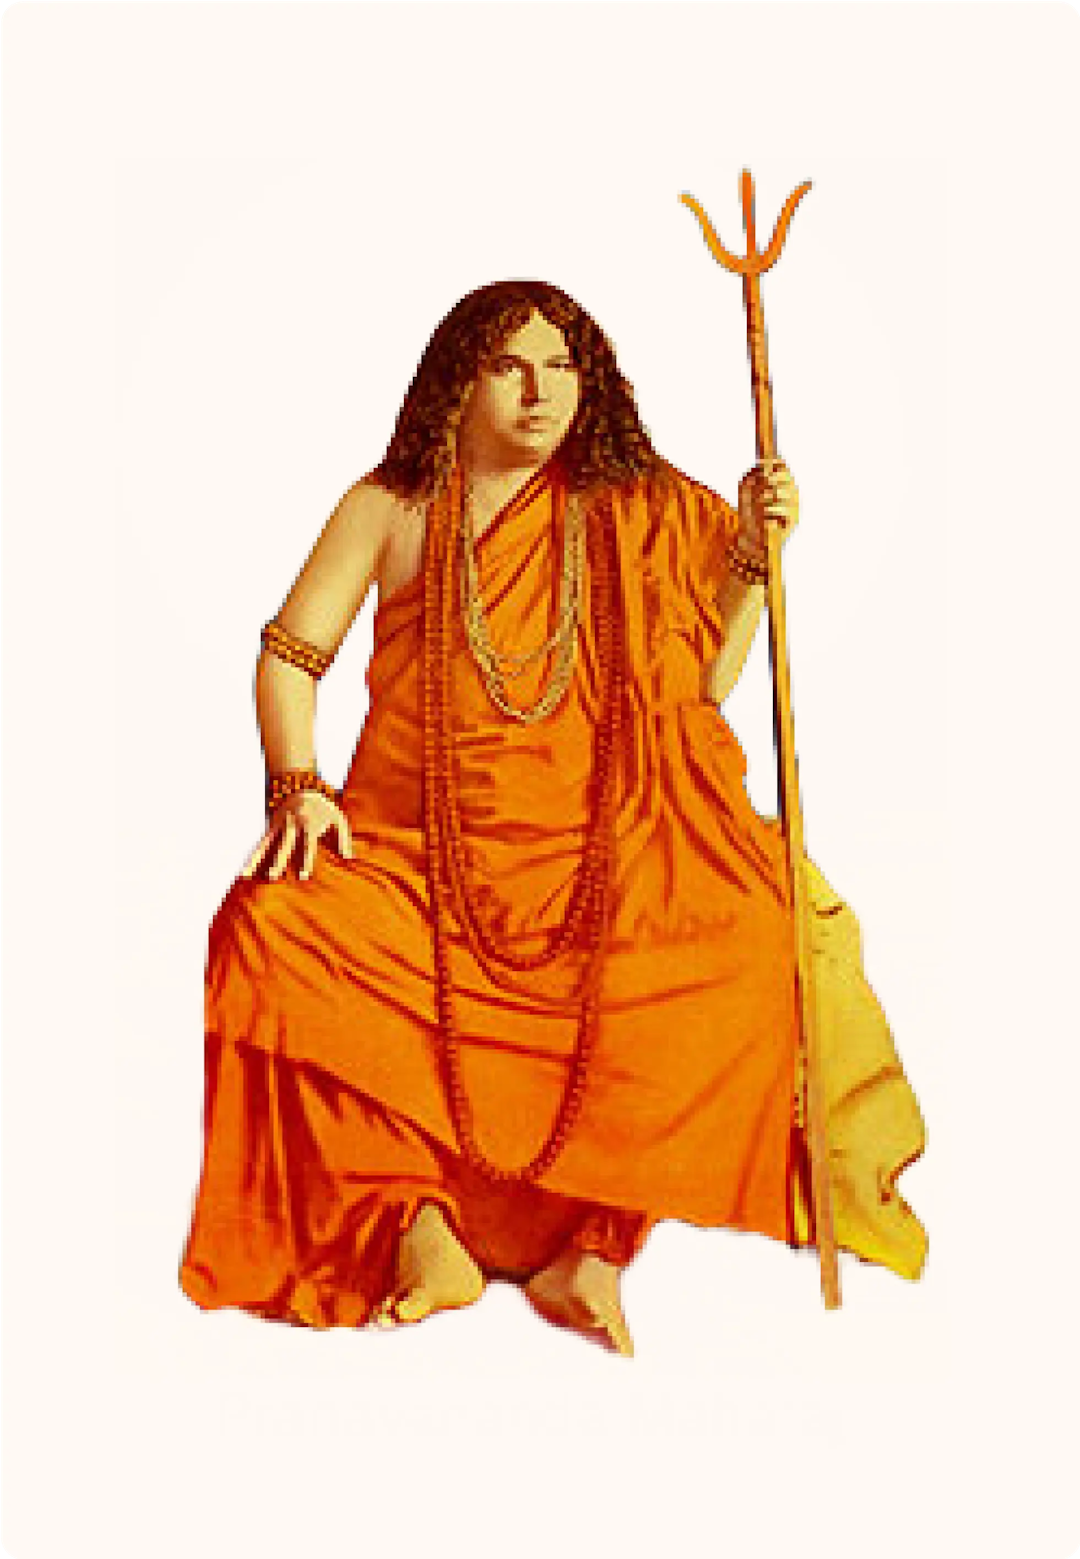 Swami Pranavanand